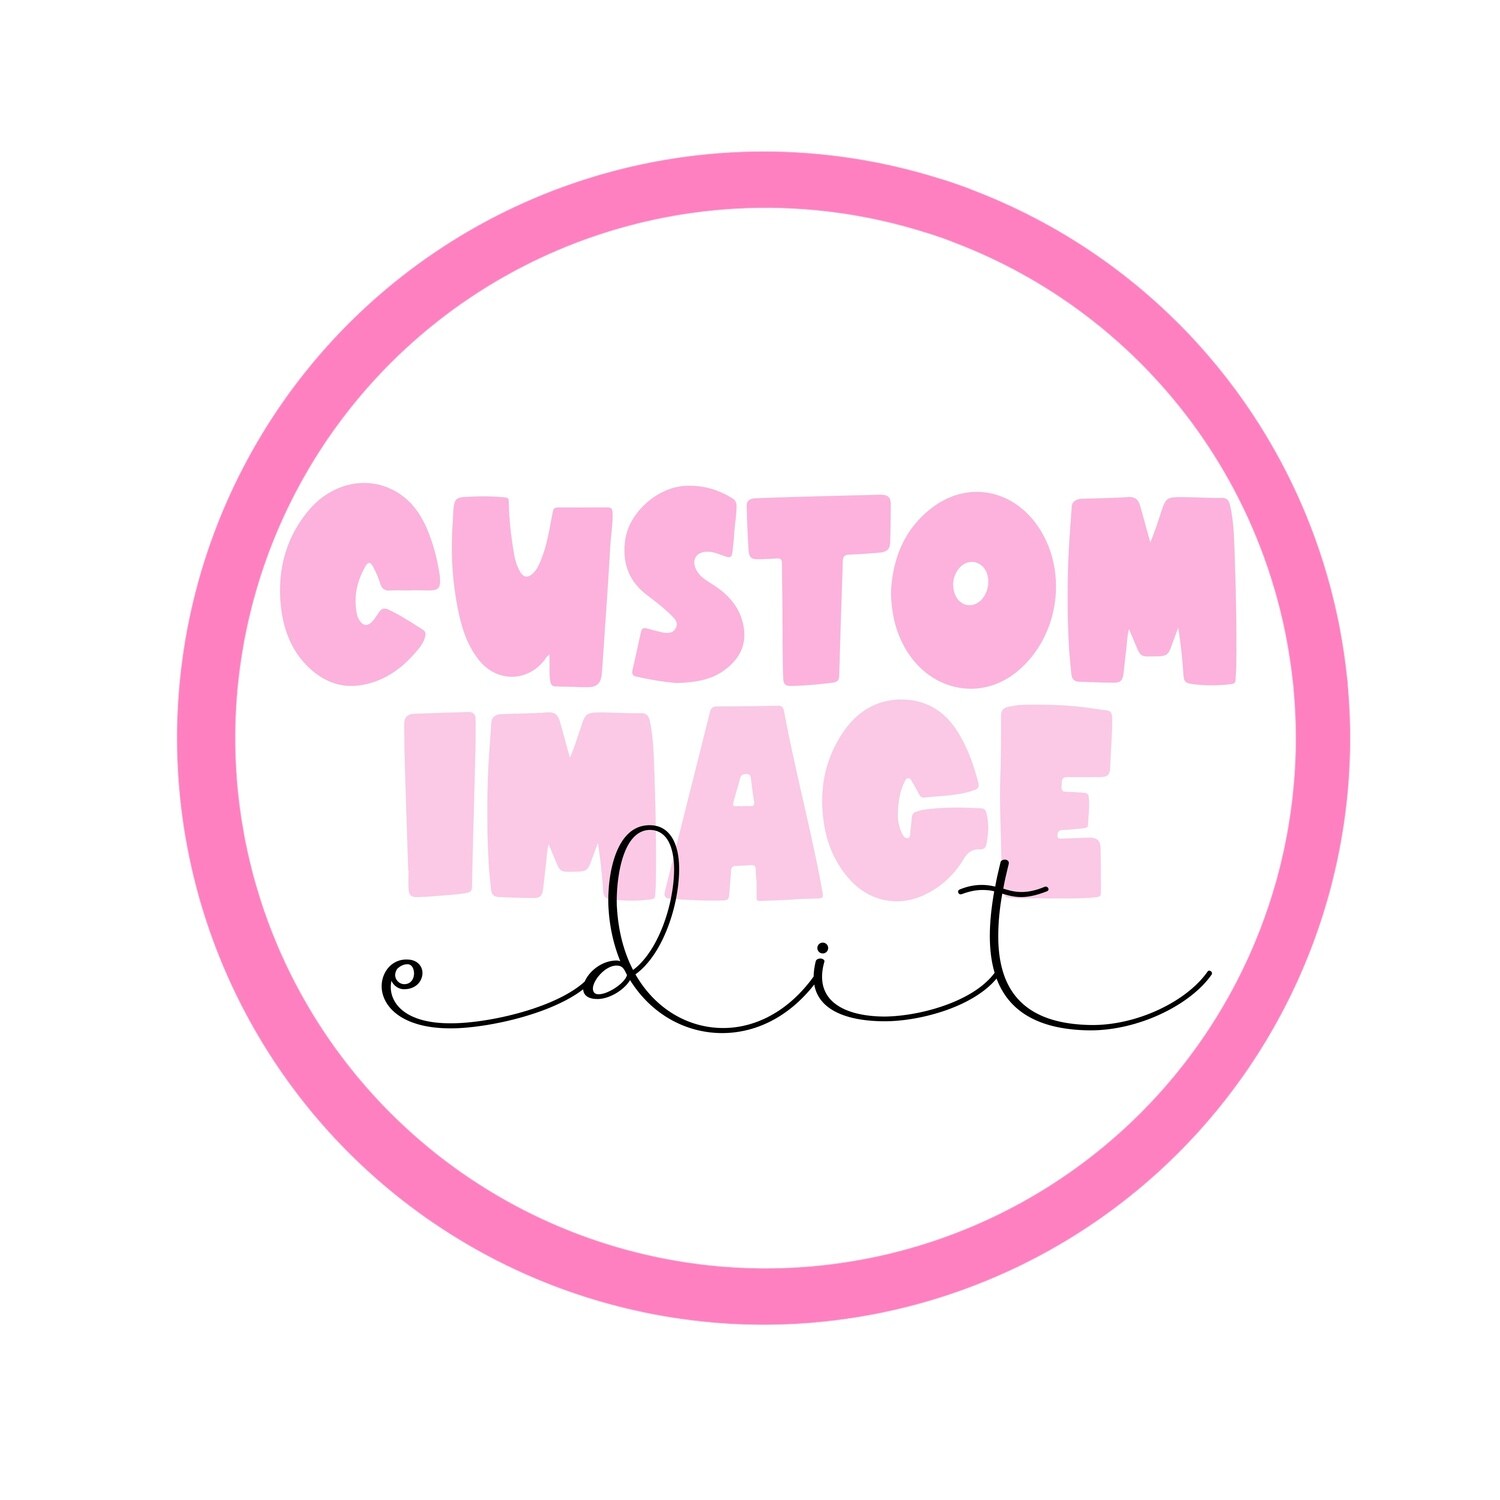 Custom Design Edit (simple)